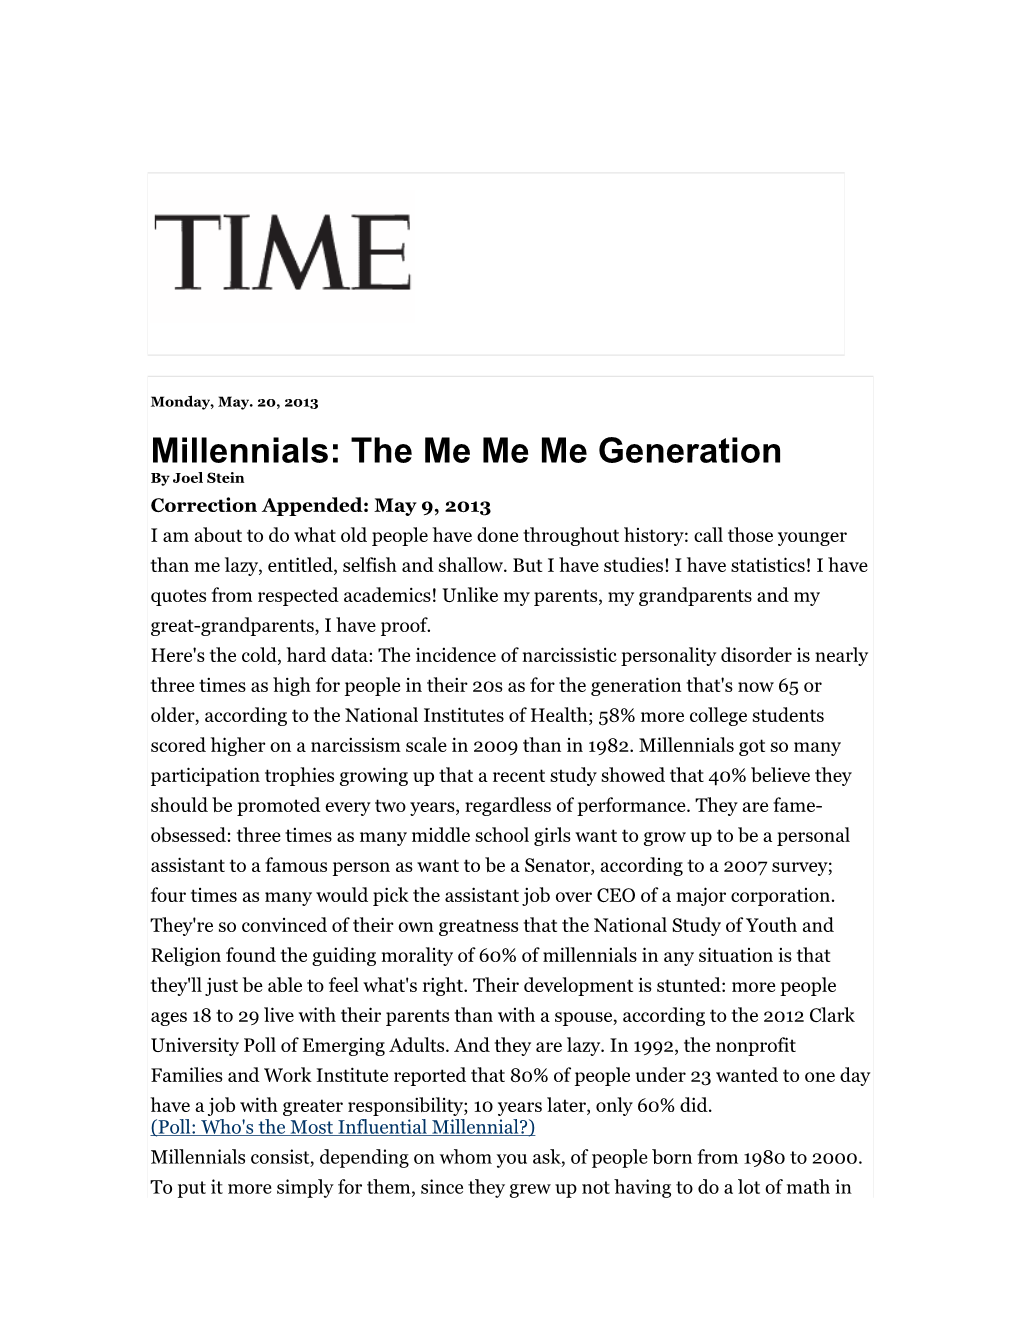 Millennials: the Me Generation